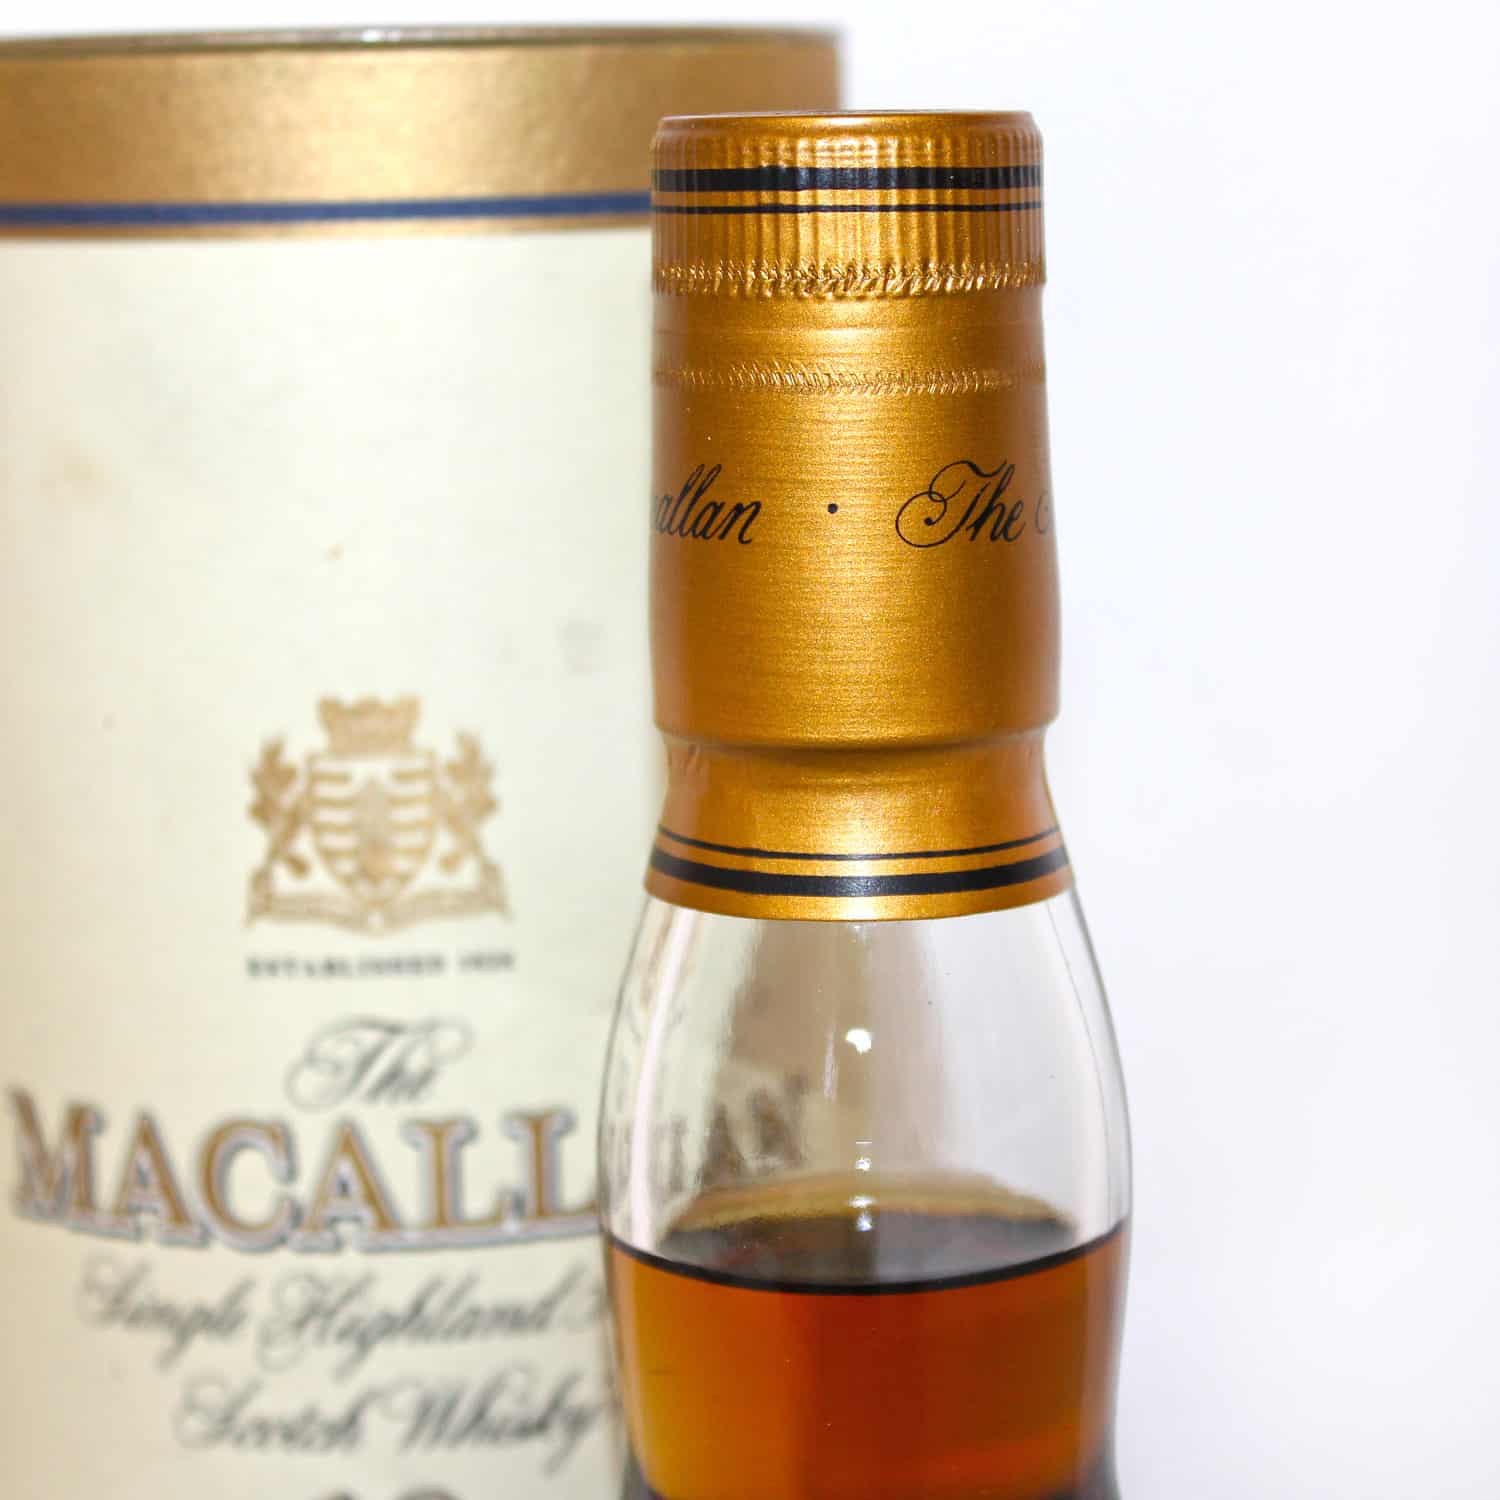 Macallan 1984 18 Year Old capsule